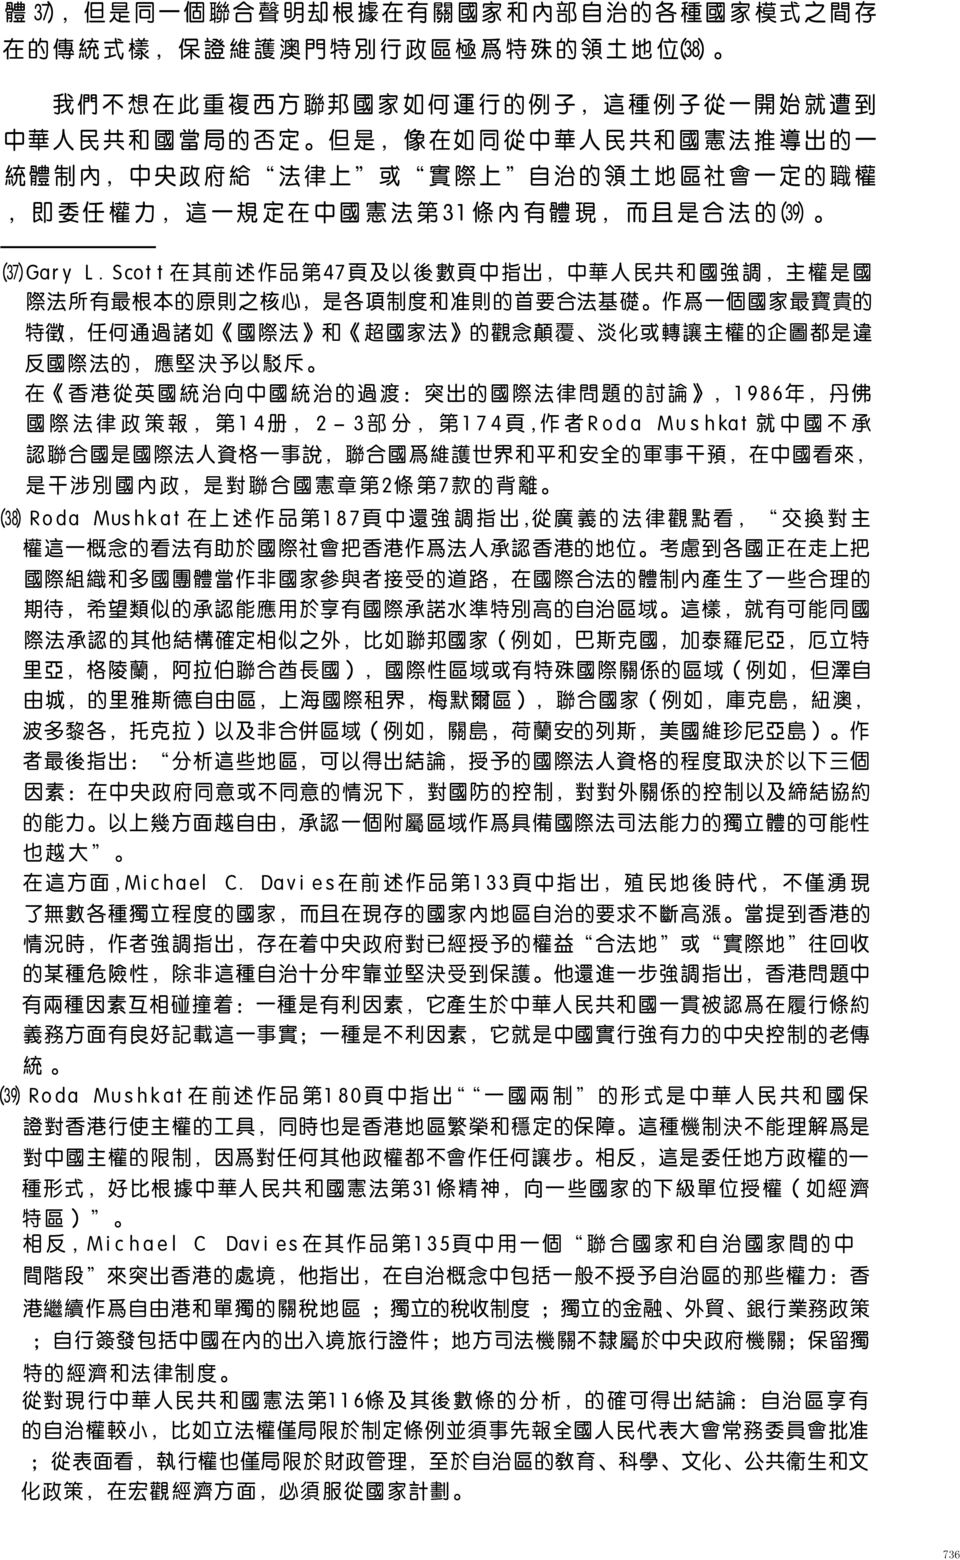 Scot t 在 其 前 述 作 品 第 47 頁 及 以 後 數 頁 中 指 出, 中 華 人 民 共 和 國 強 調, 主 權 是 國 際 法 所 有 最 根 本 的 原 則 之 核 心, 是 各 項 制 度 和 准 則 的 首 要 合 法 基 礎 作 爲 一 個 國 家 最 寶 貴 的 特 徵, 任 何 通 過 諸 如 國 際 法 和 超 國 家 法 的 觀 念 顛 覆 淡 化 或 轉 讓